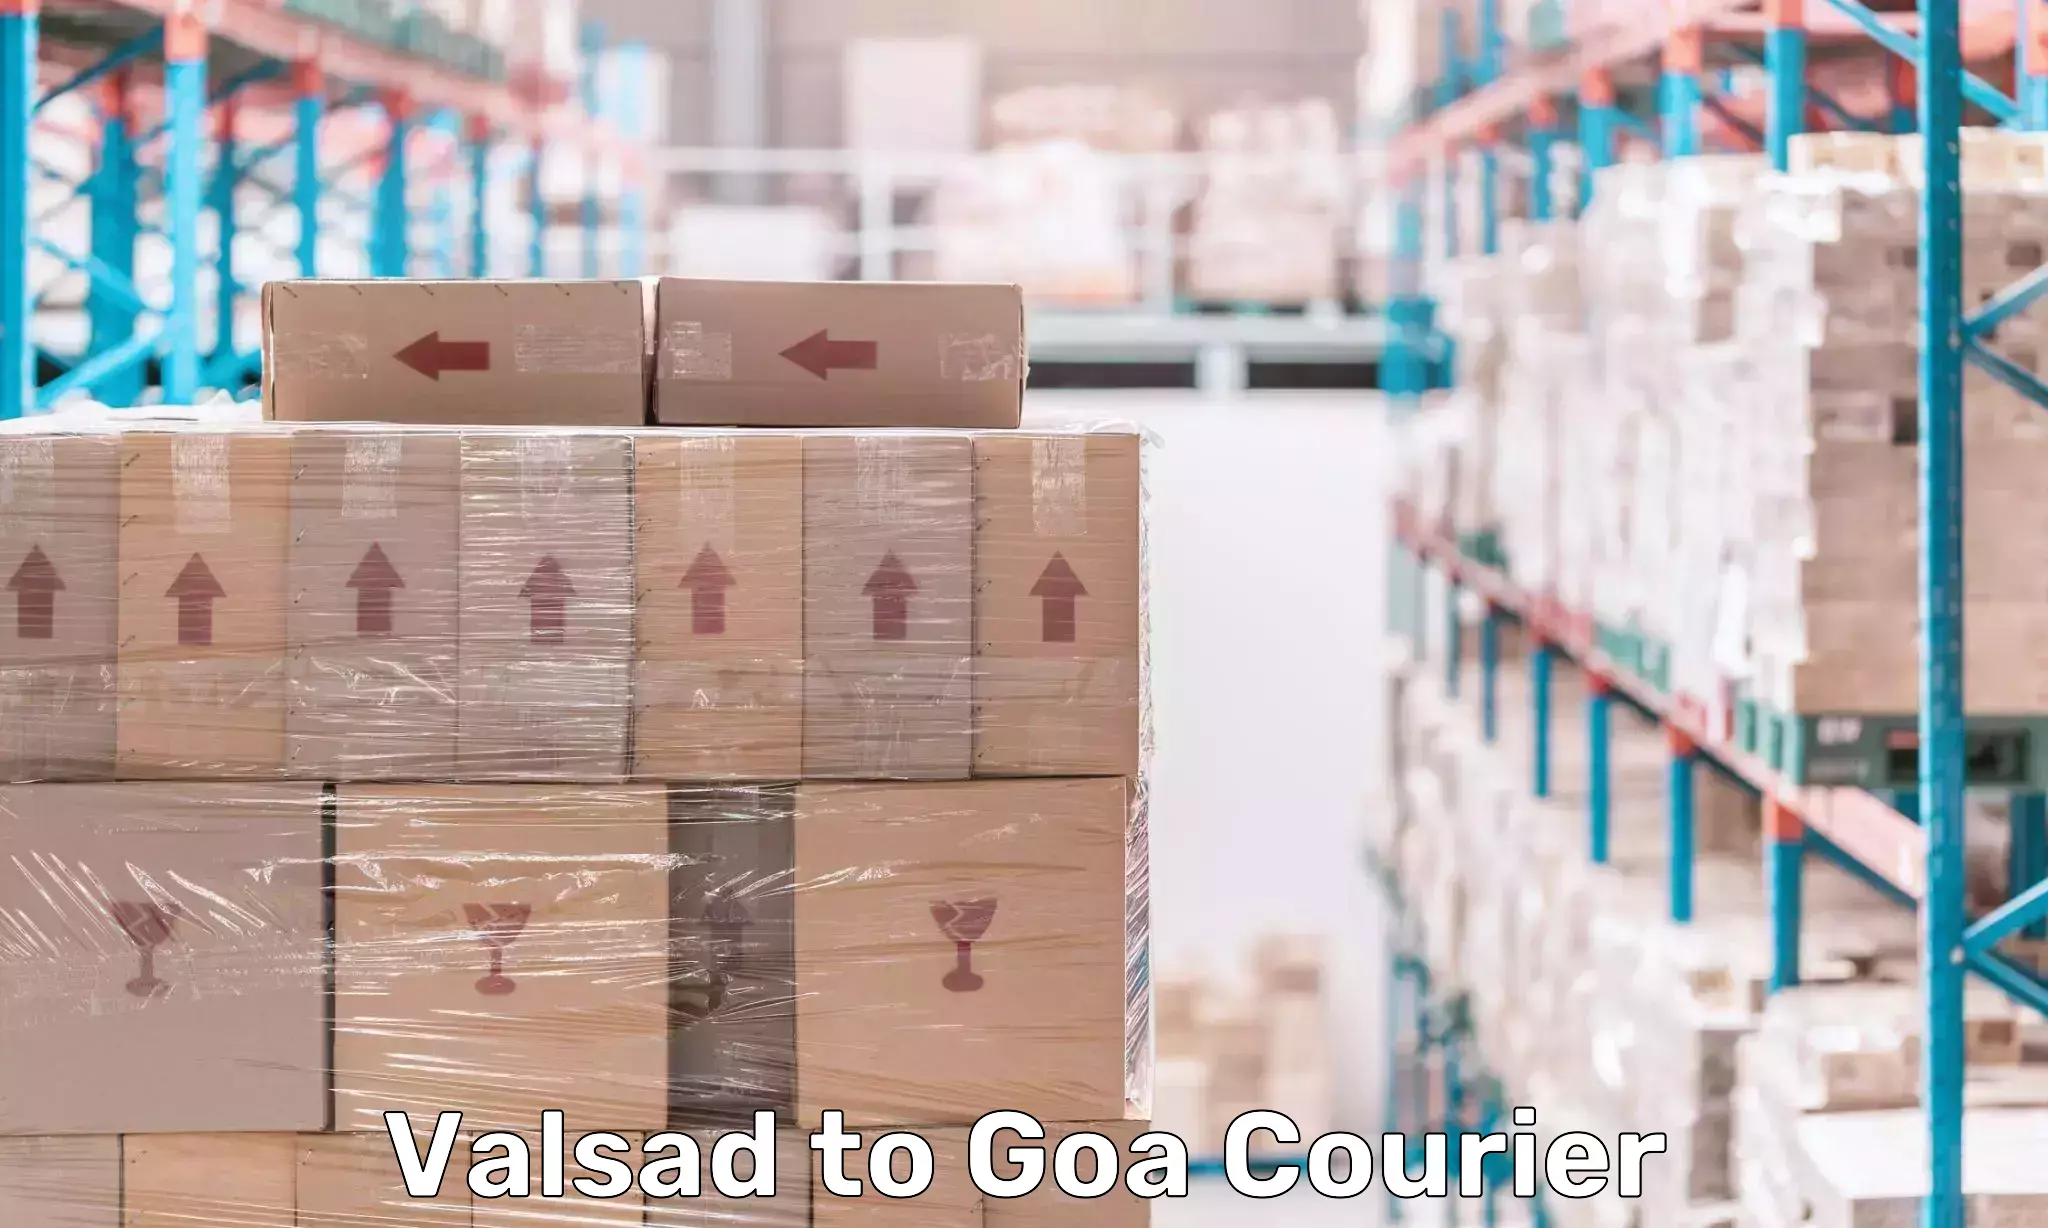 Cash on delivery service Valsad to Goa